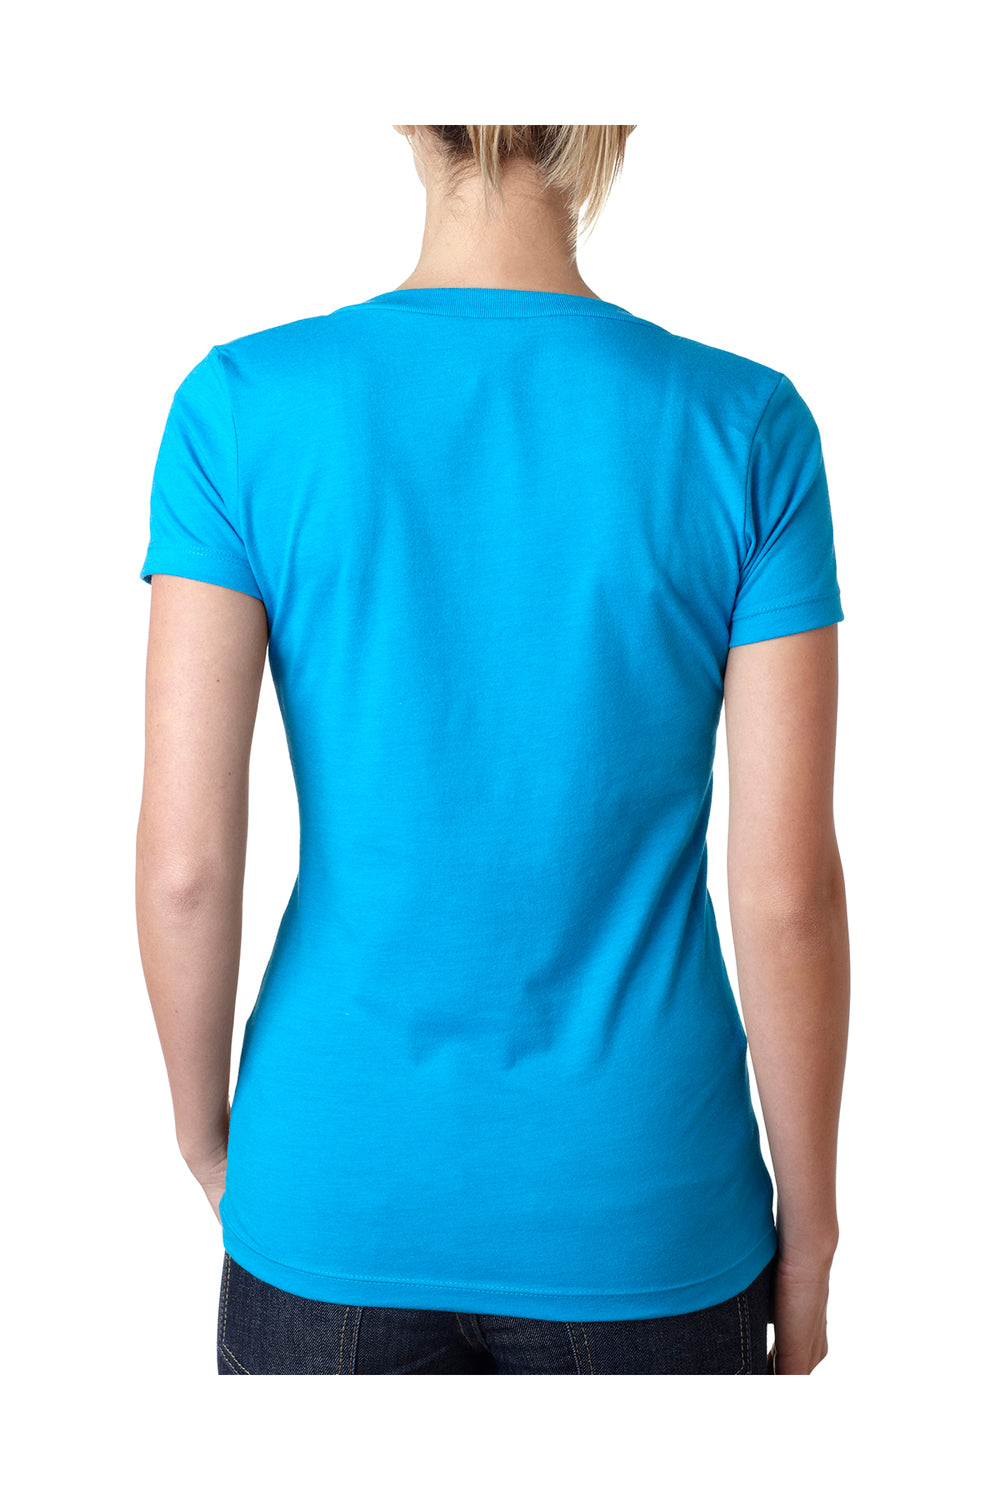 Next Level 6640 Womens CVC Jersey Short Sleeve V-Neck T-Shirt Turquoise Blue Back